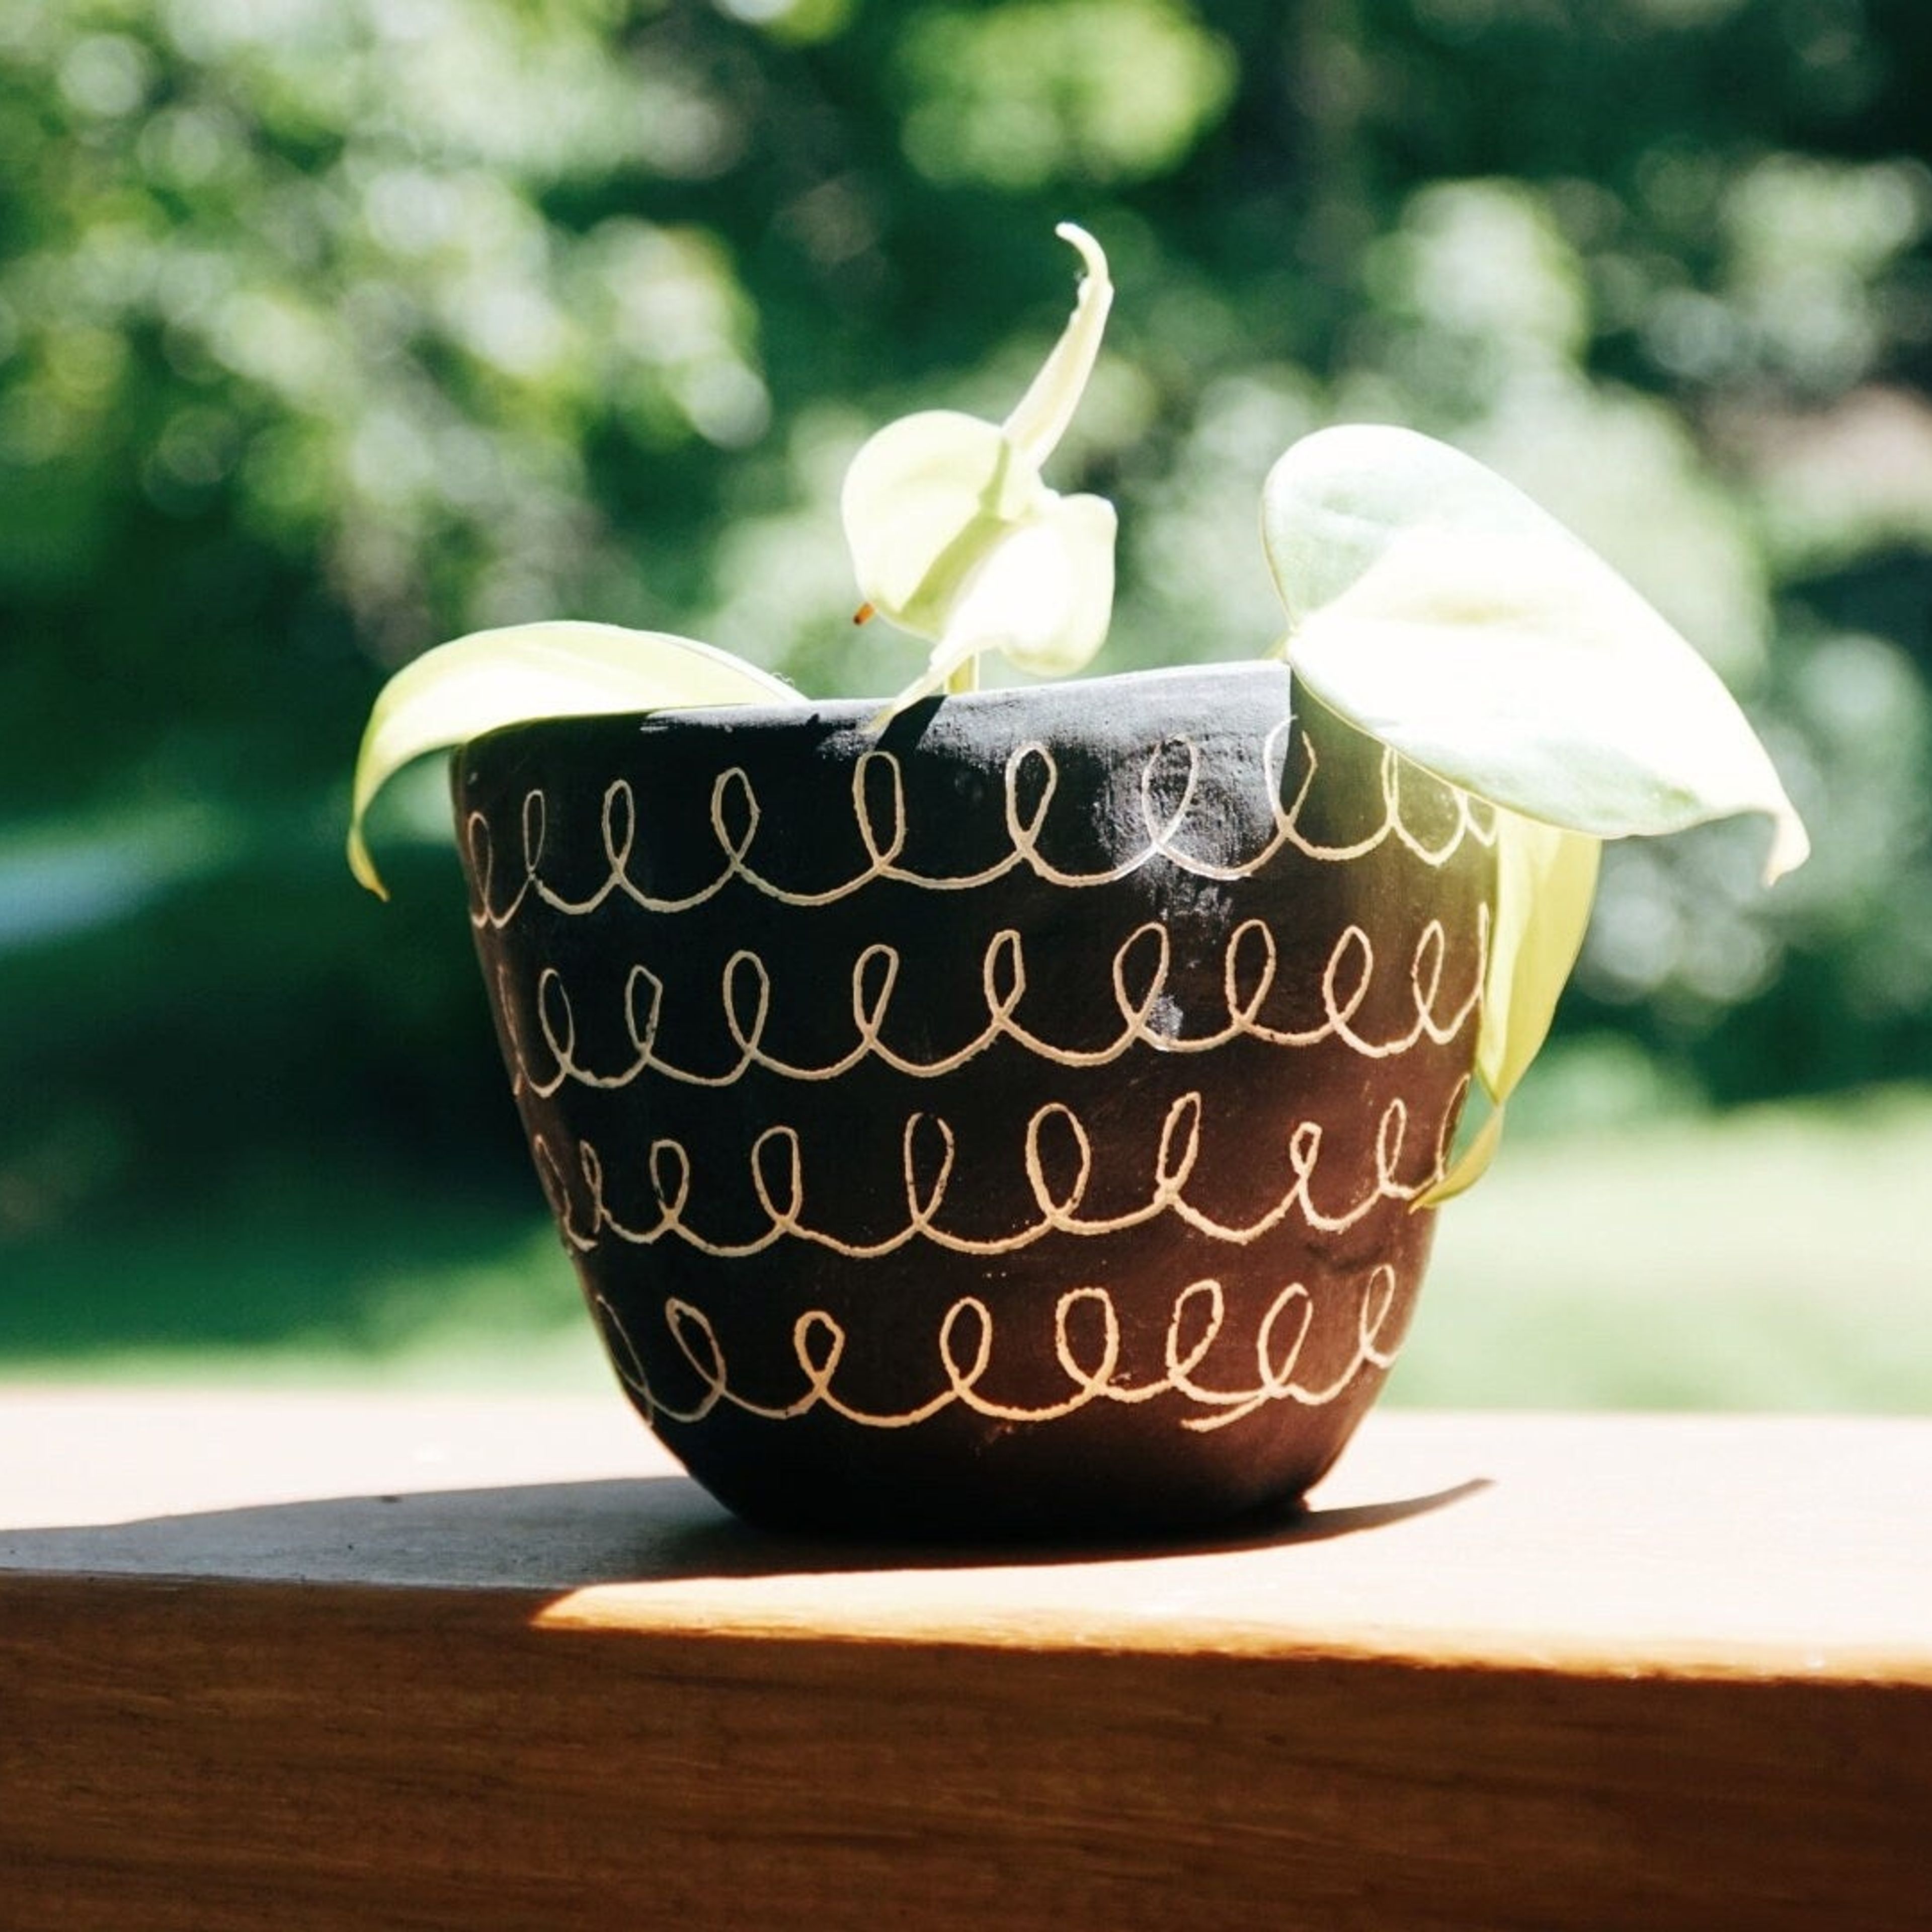 Black & White Earthenware Mini Planter w/ "Curly" Design - Succulent Planter - Small Plant Pot - Propagating Planter - Seedling Pot